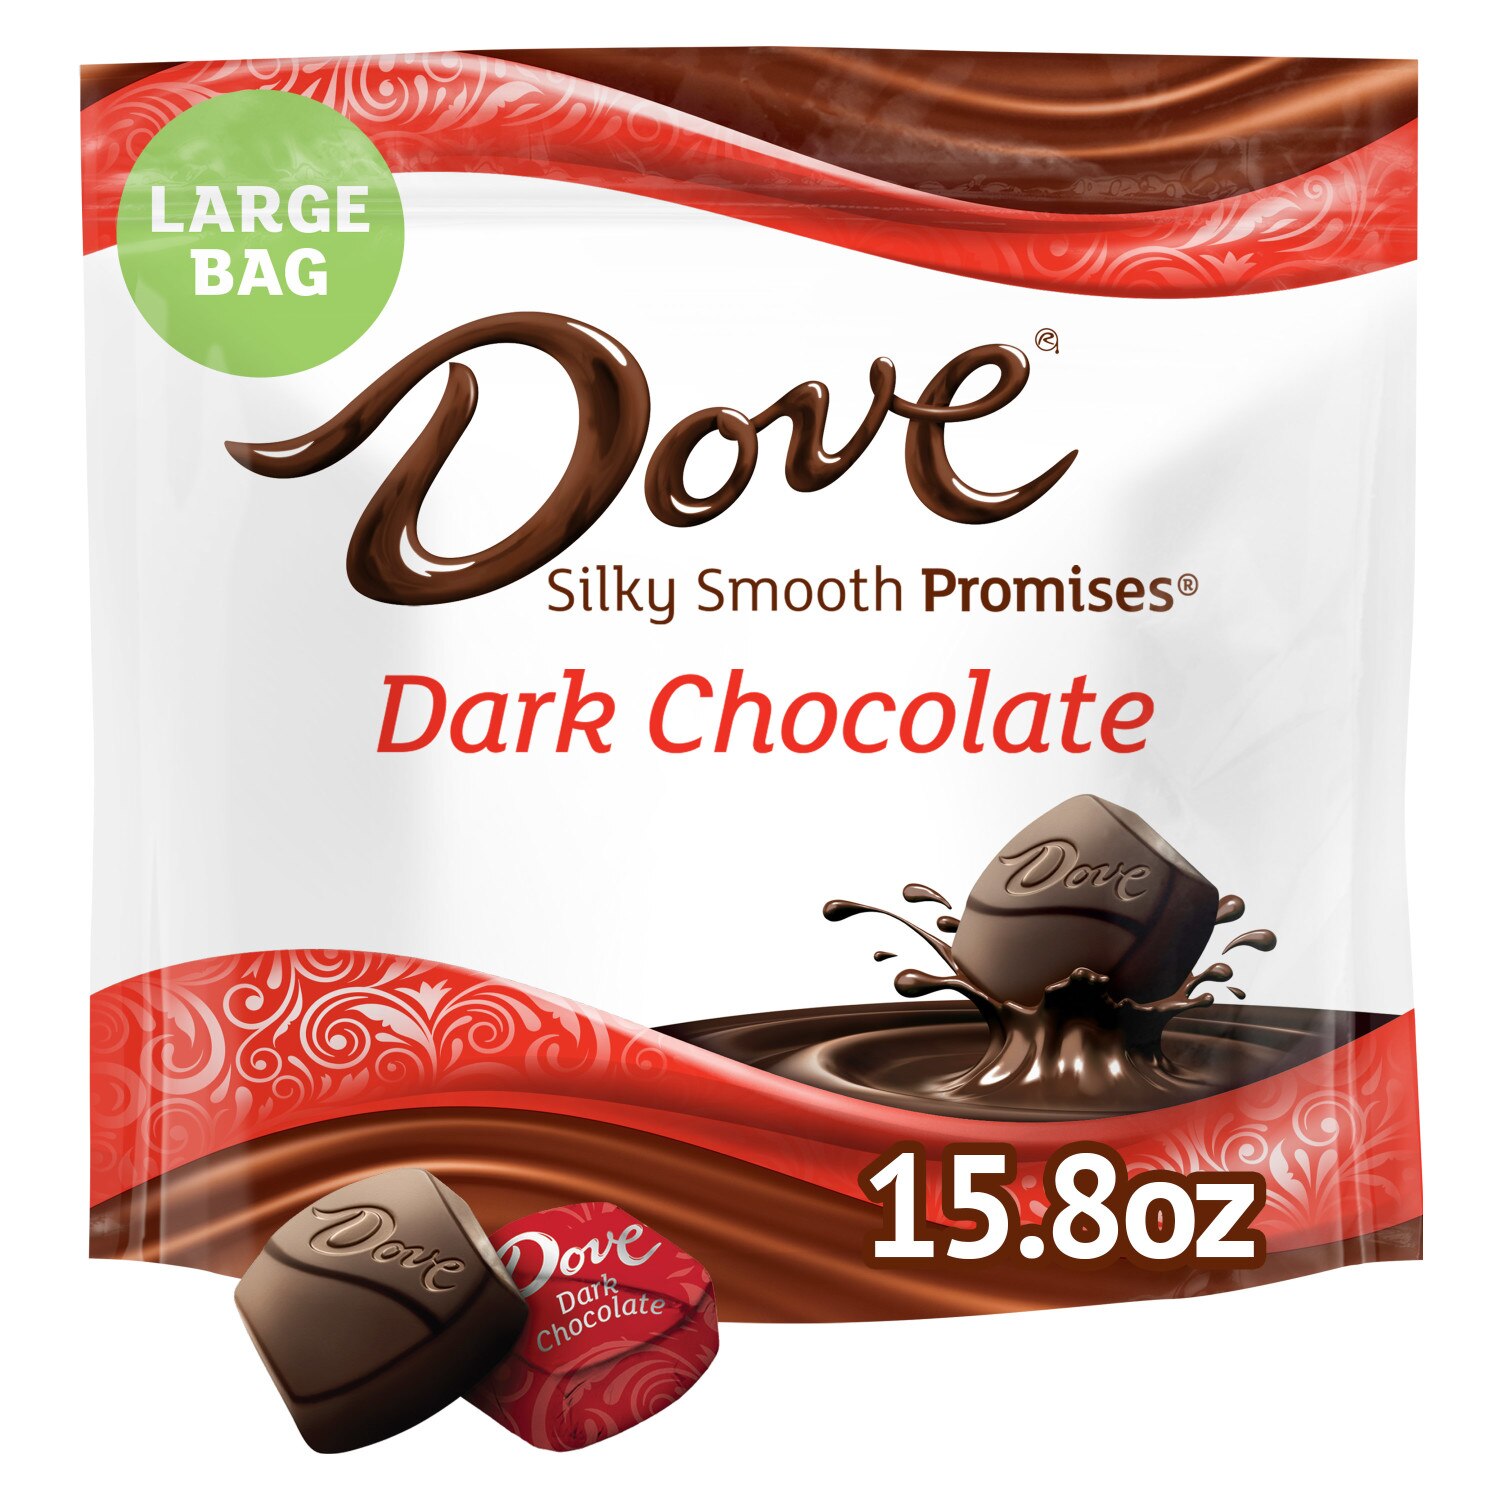 Dove Promises, Dark Chocolate Candy, 14.08 Oz Large Bag